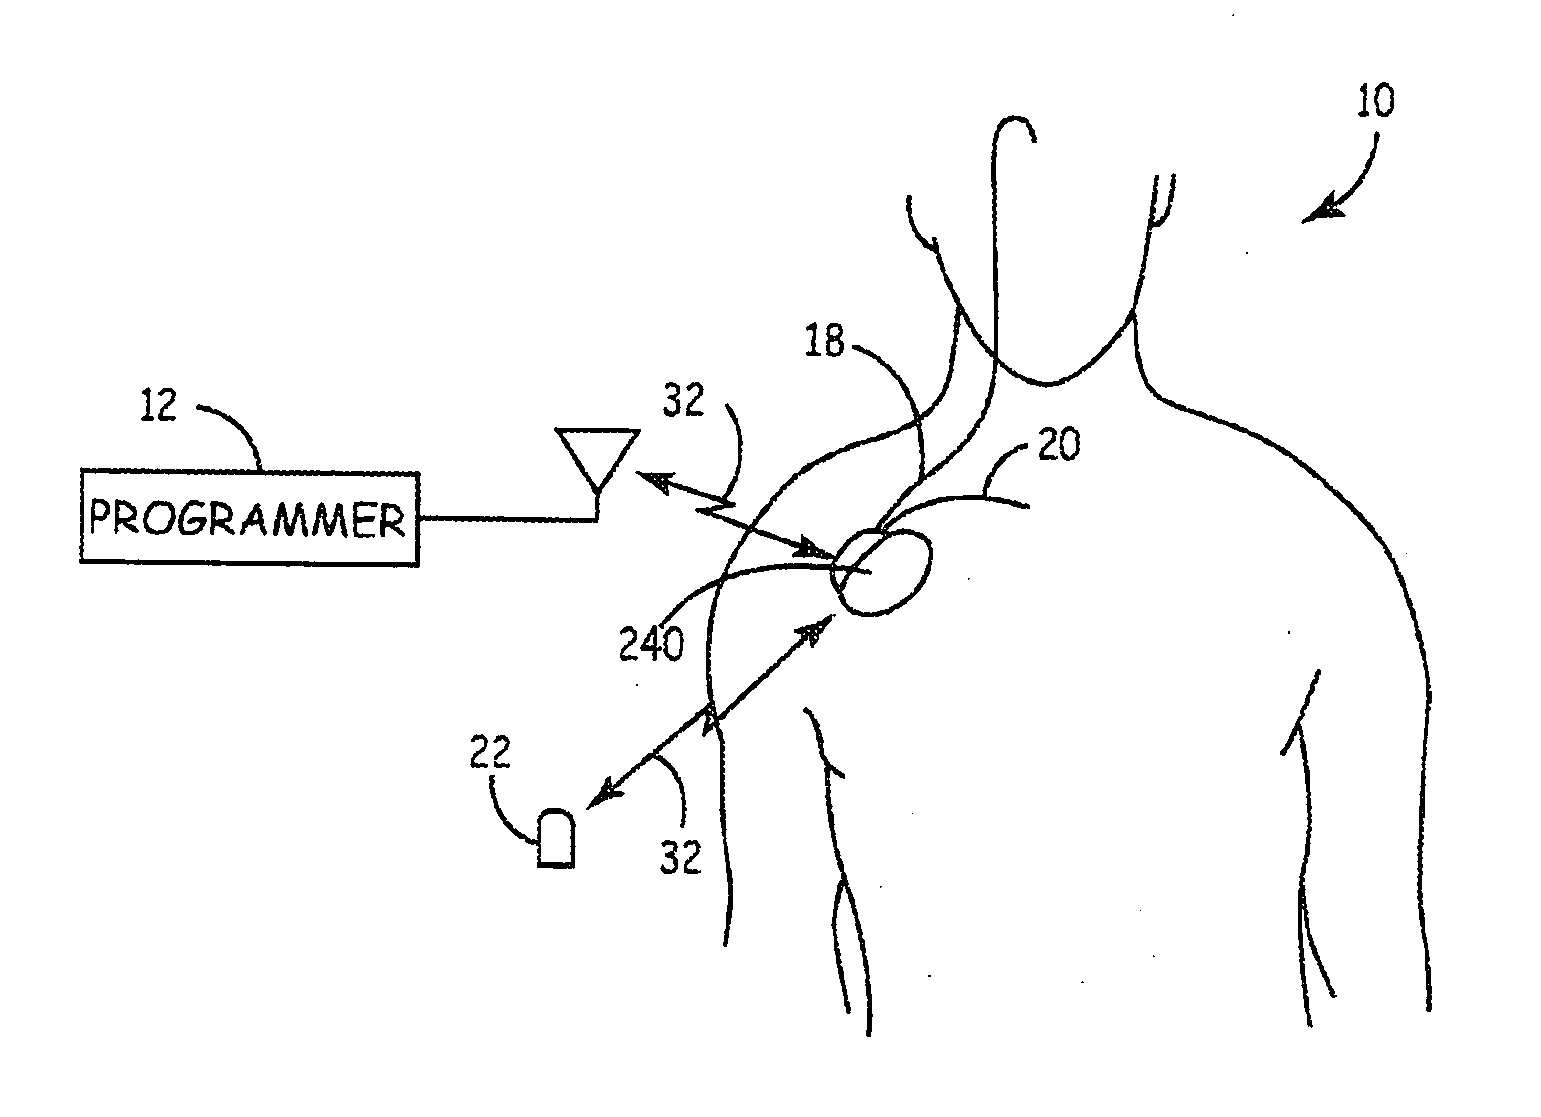 System and method for segmenting a cardiac signal based on brain stimulation